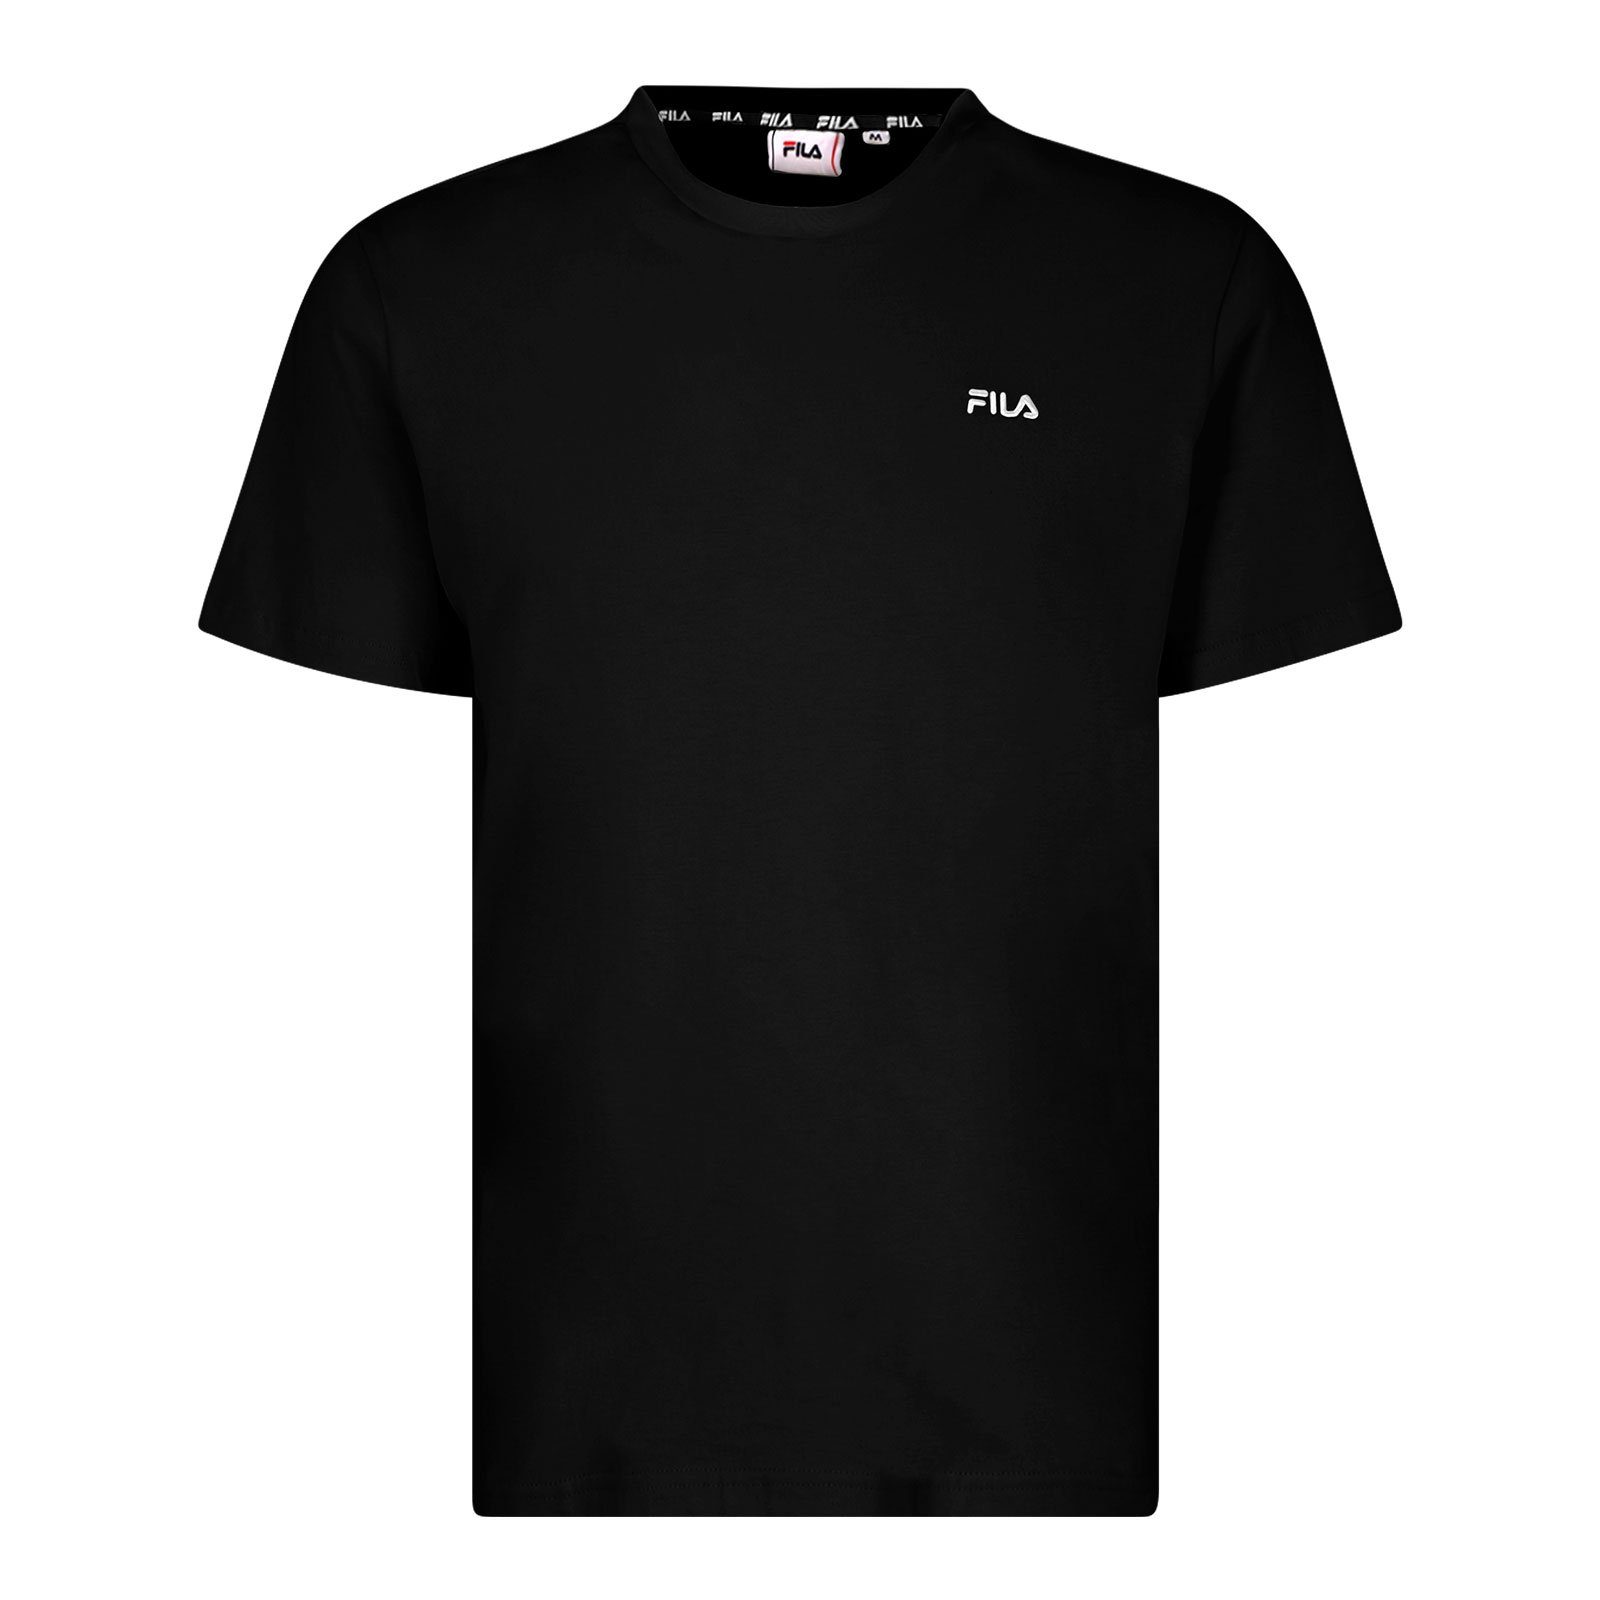 Bio-Baumwolle T-Shirt aus black 80010 Fila Berloz Tee